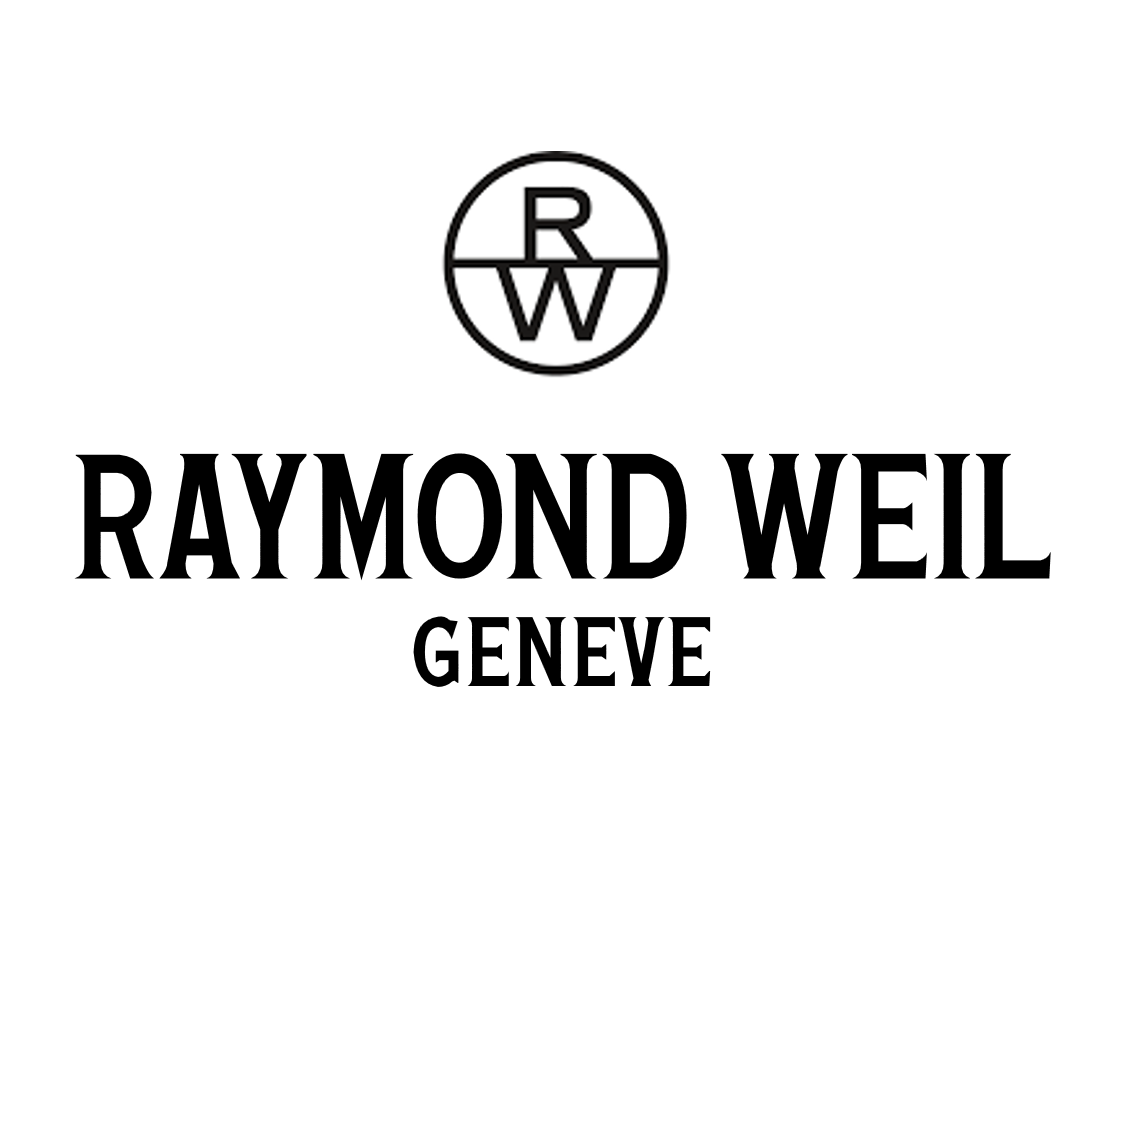 Raymond Weil